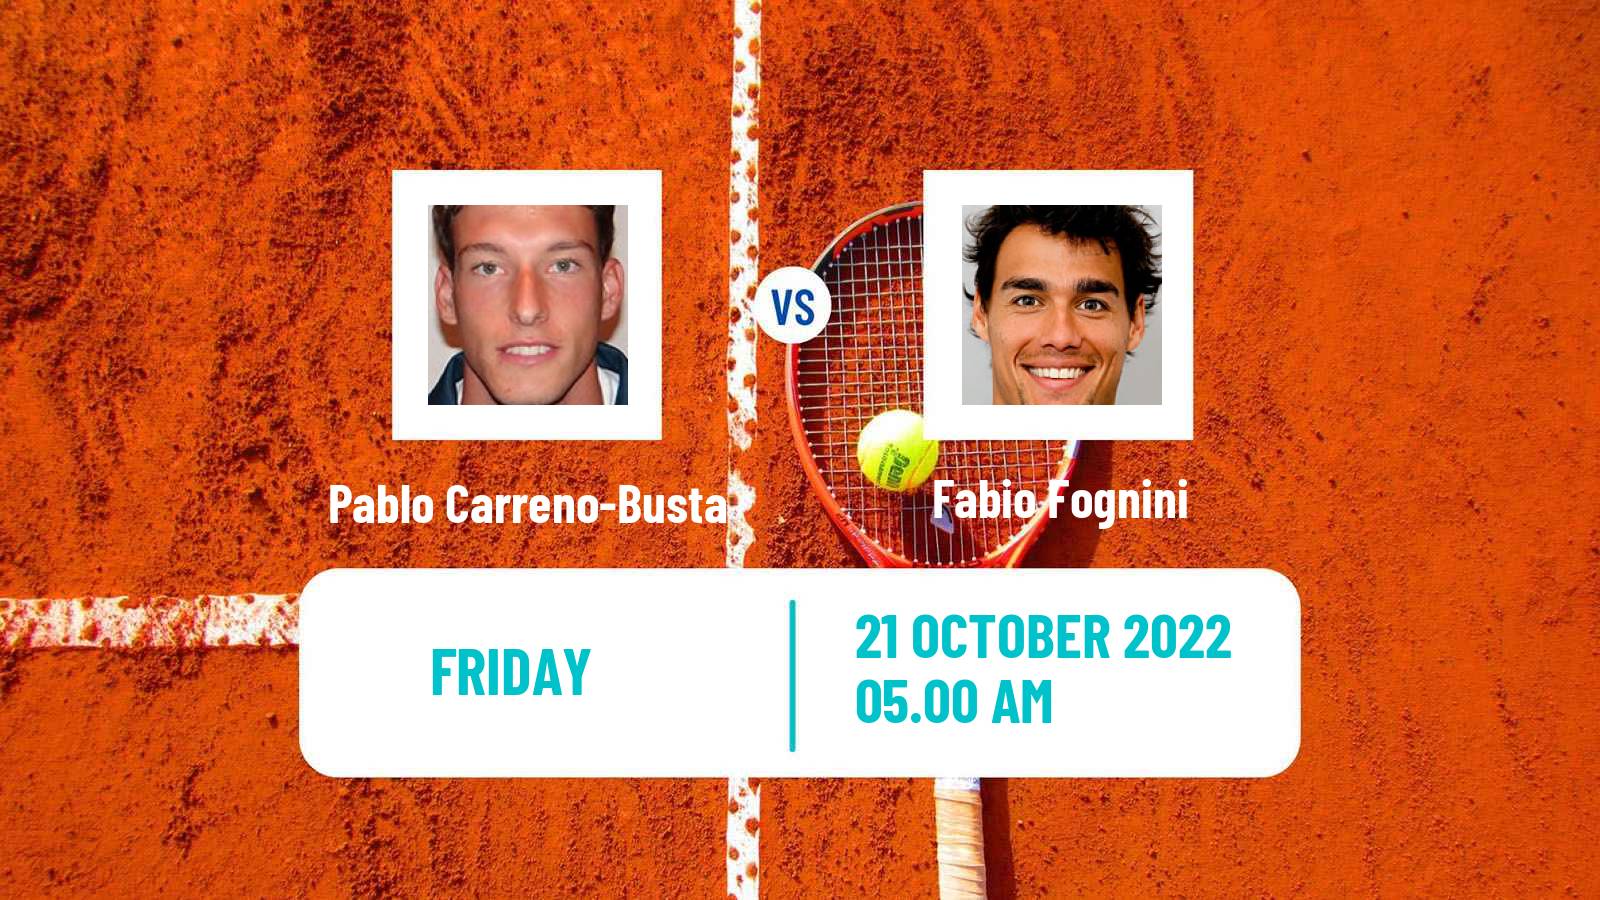 Tennis ATP Napoli Pablo Carreno-Busta - Fabio Fognini